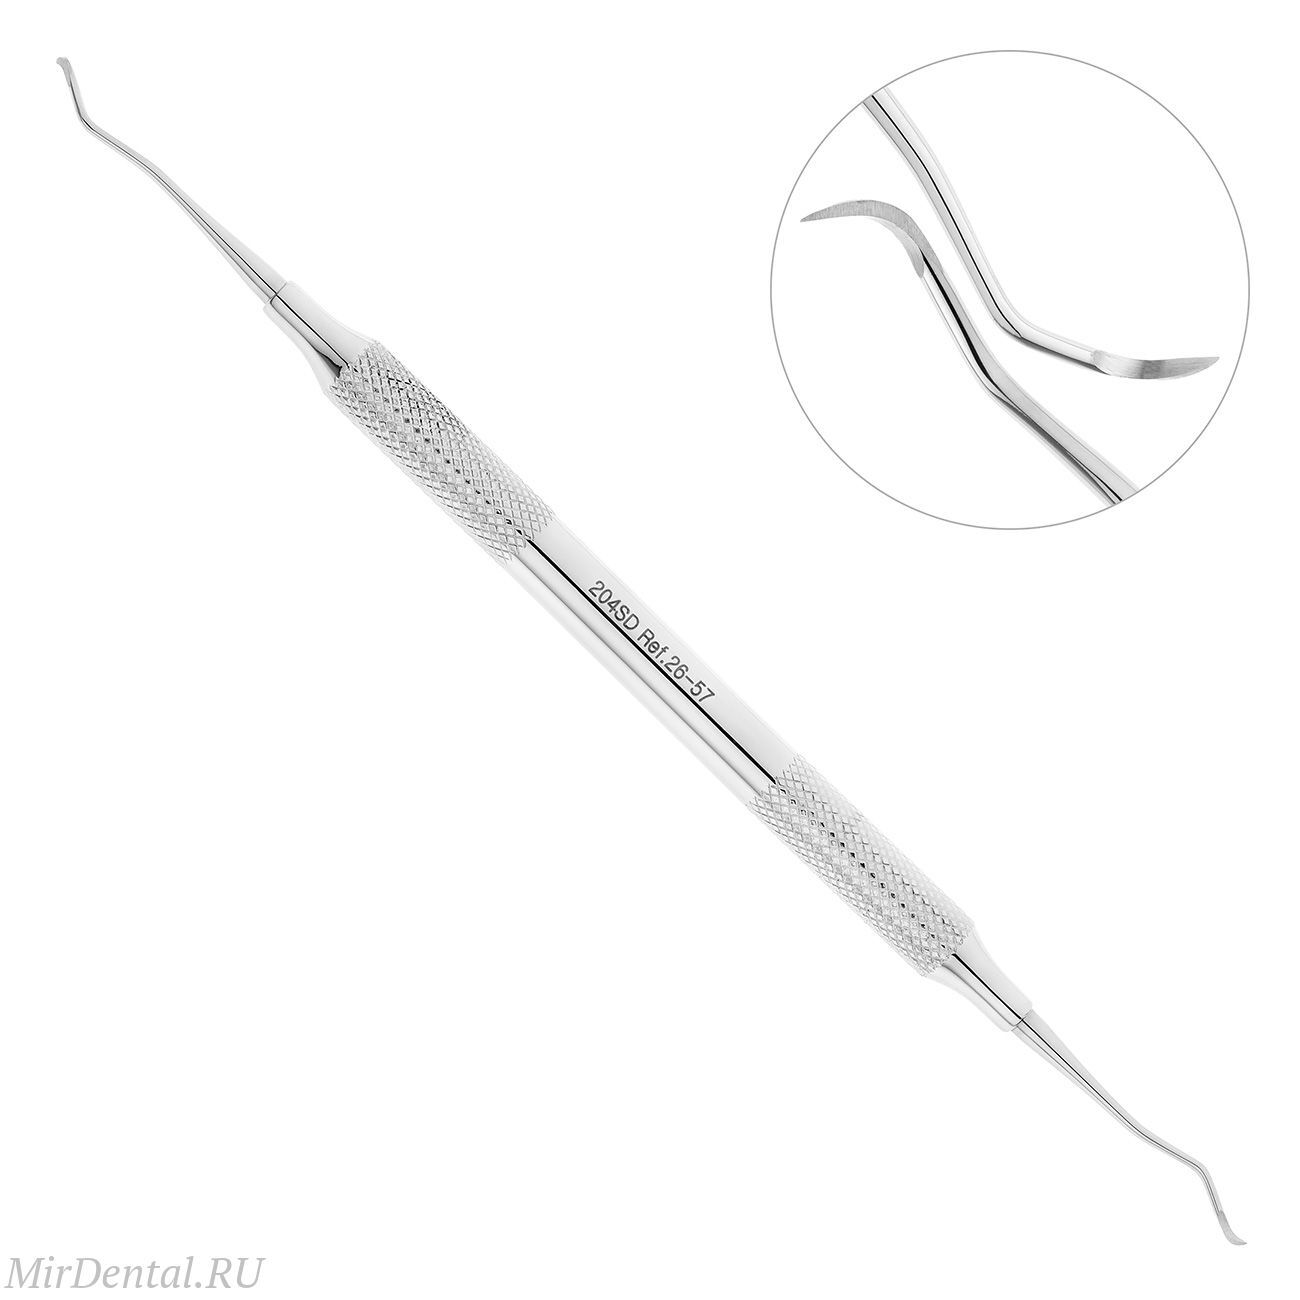 Скейлер парадонтологический, форма 204 SD, ручка диаметр 8 мм, 26-57*